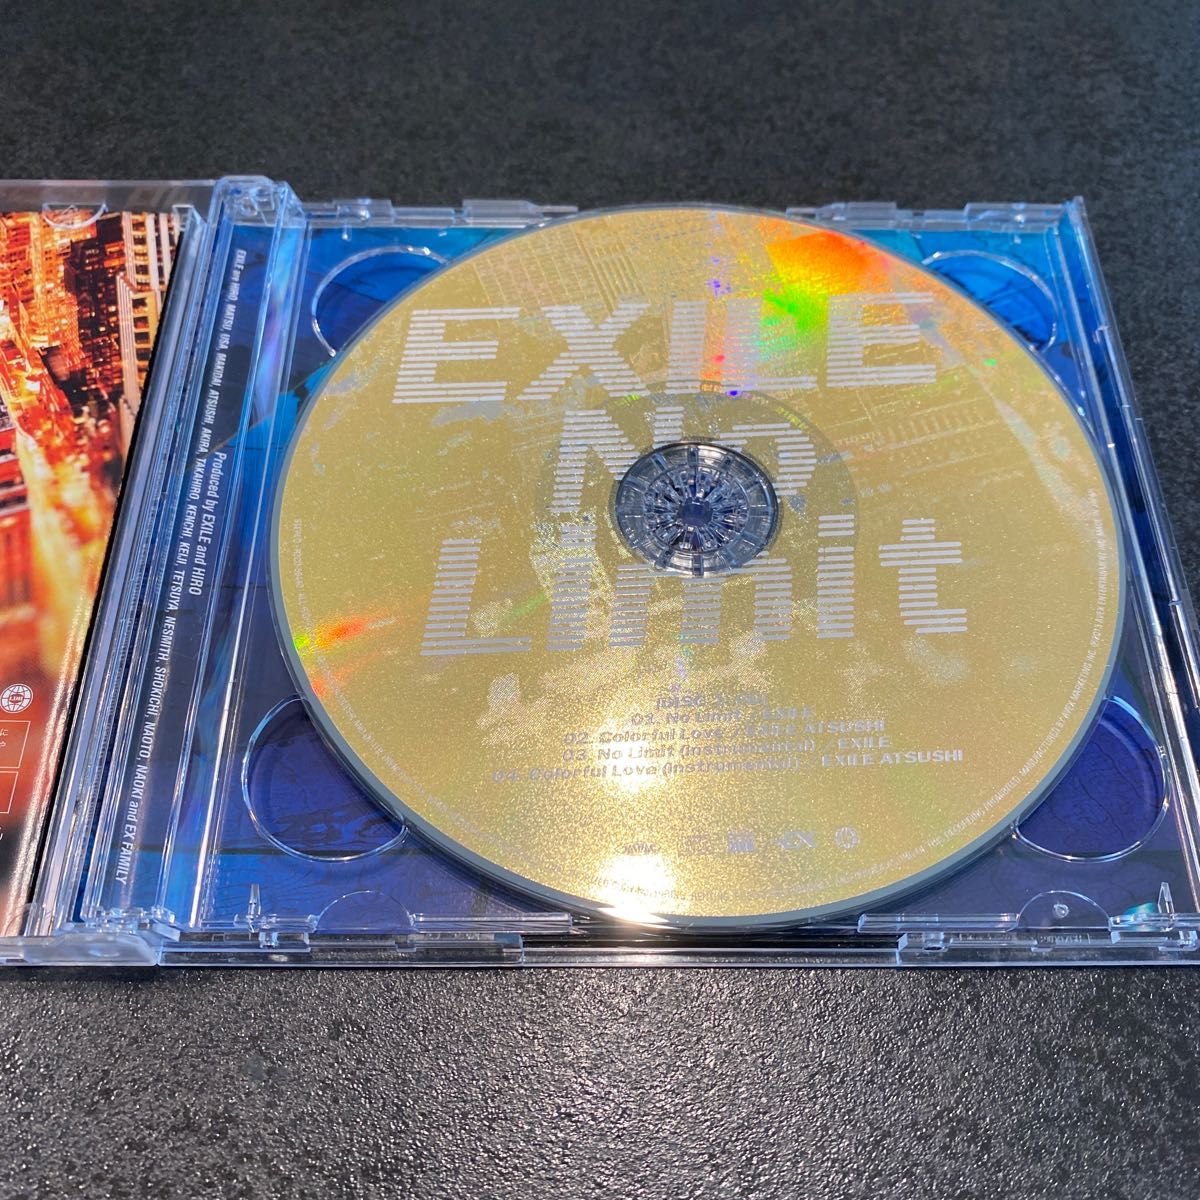  EXILE CD+DVD/No Limit 初回仕様 13/9/25発売 オリコン加盟店　(おまけキーホルダー、バッチ付)